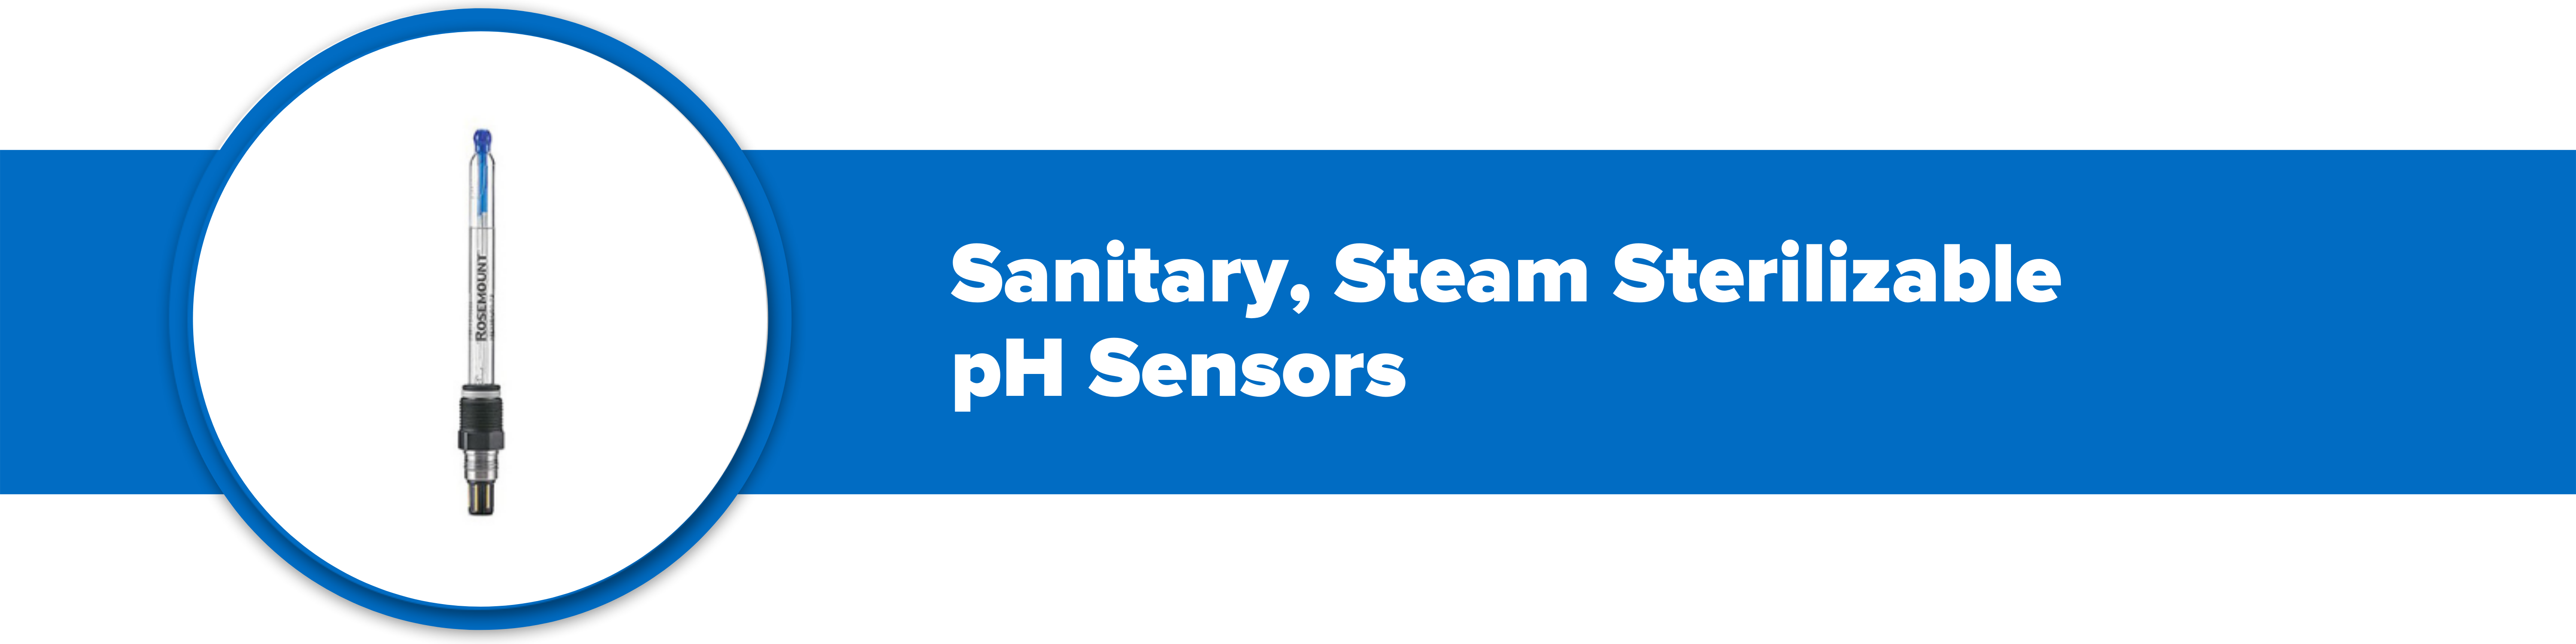 Header image with text 'sanitary, steam sterilizable pH sensors'.